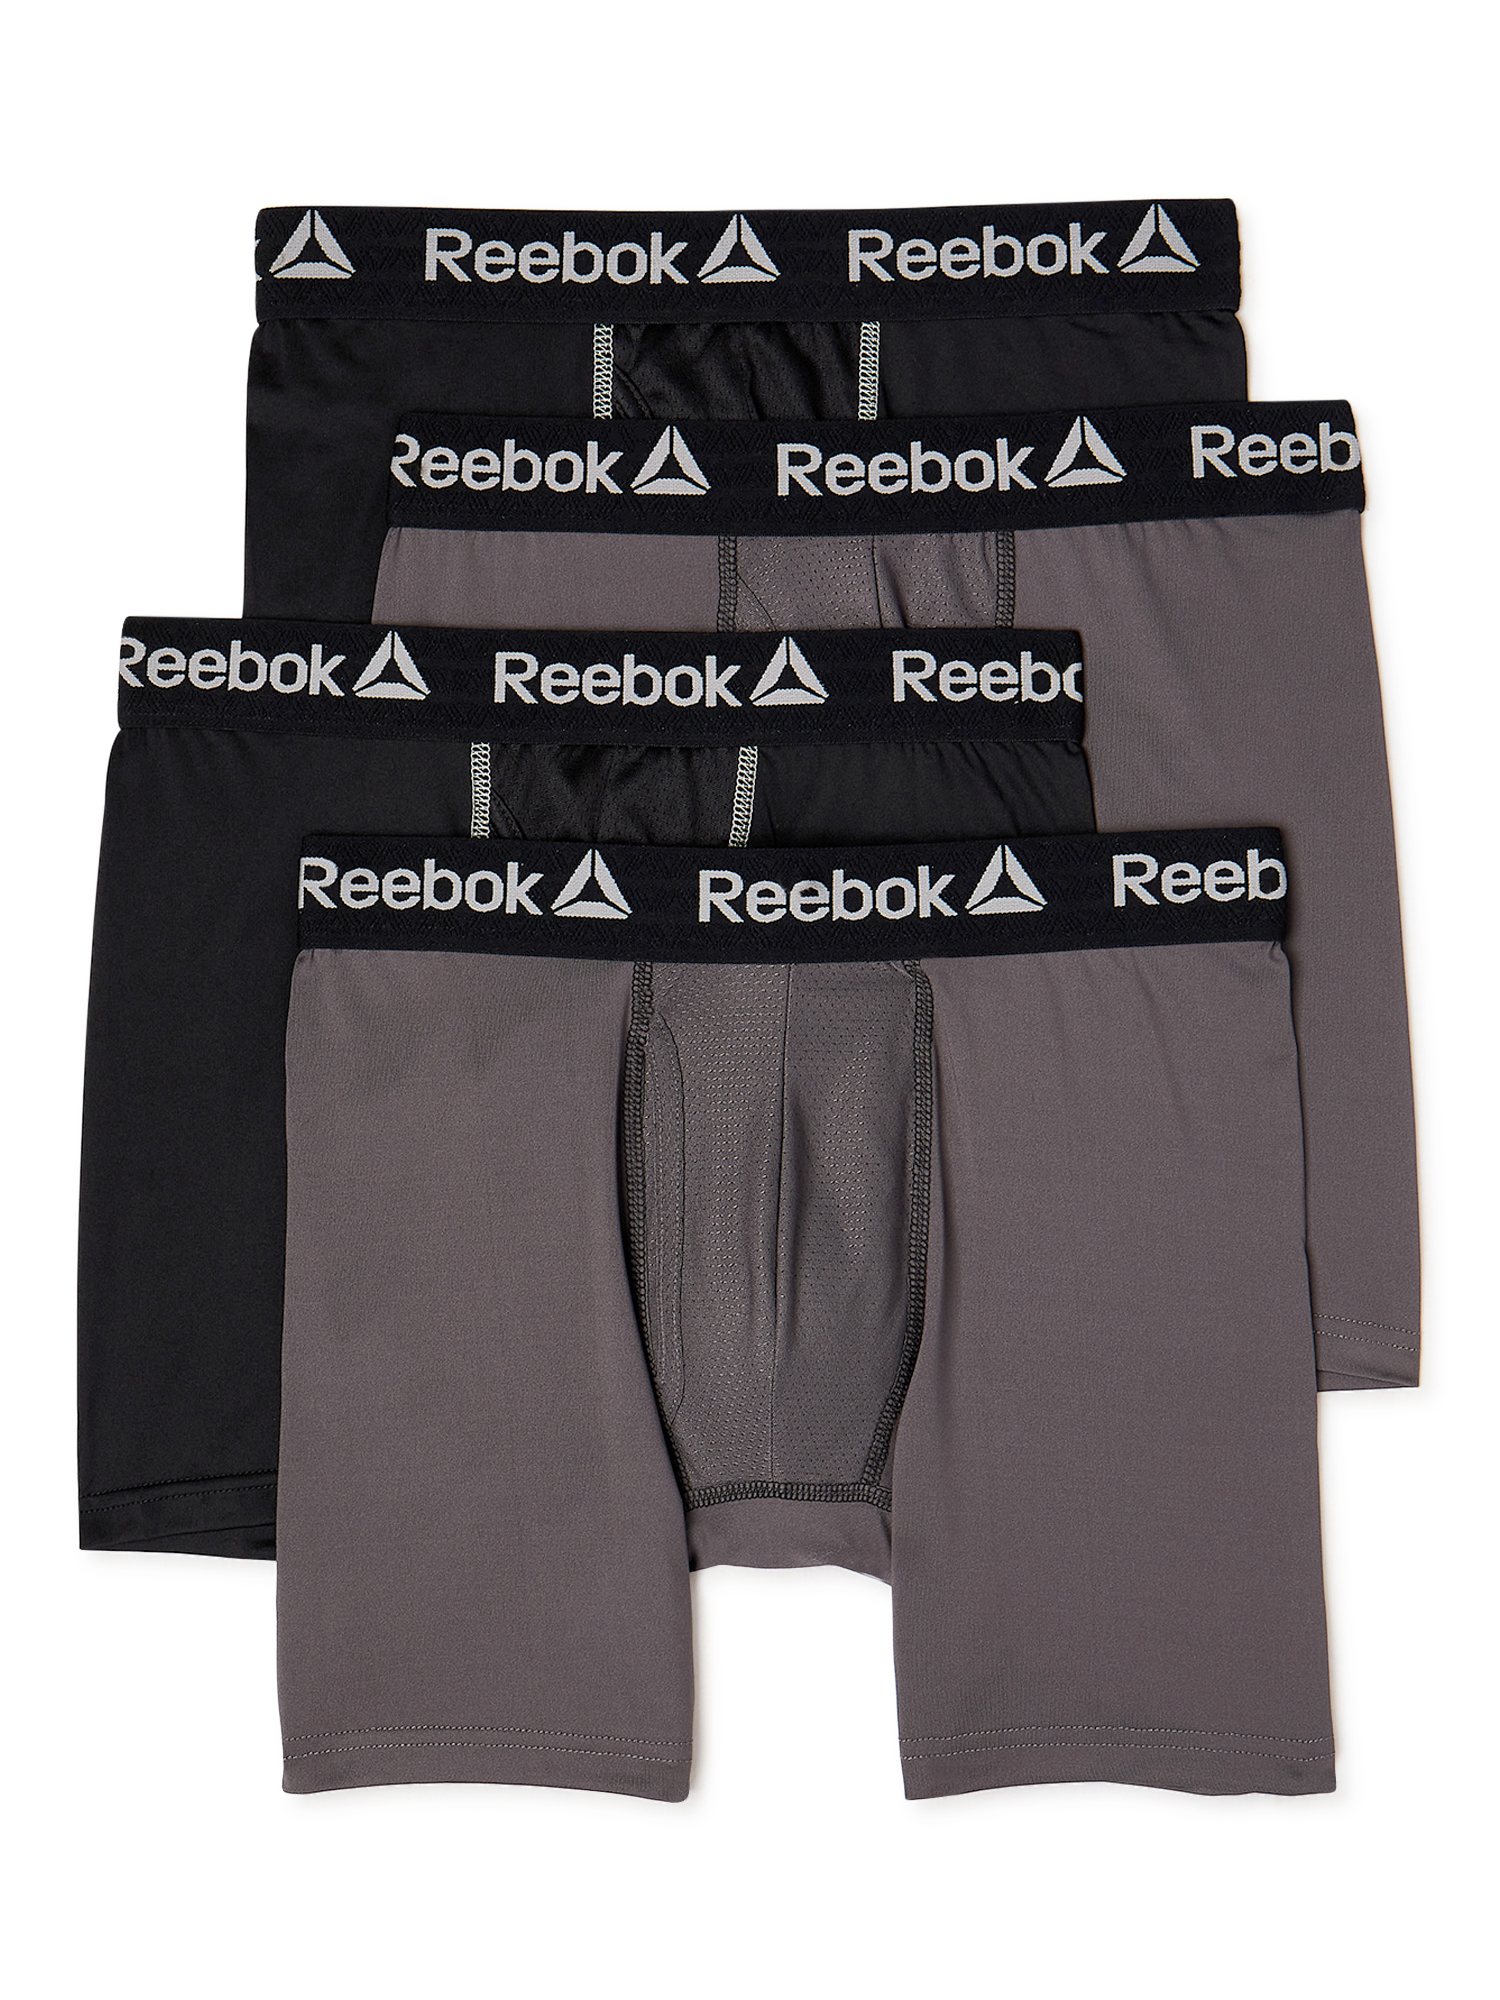 Reebok Men's Performance Regular Leg Boxer Briefs, 4 Pack - image 1 of 8